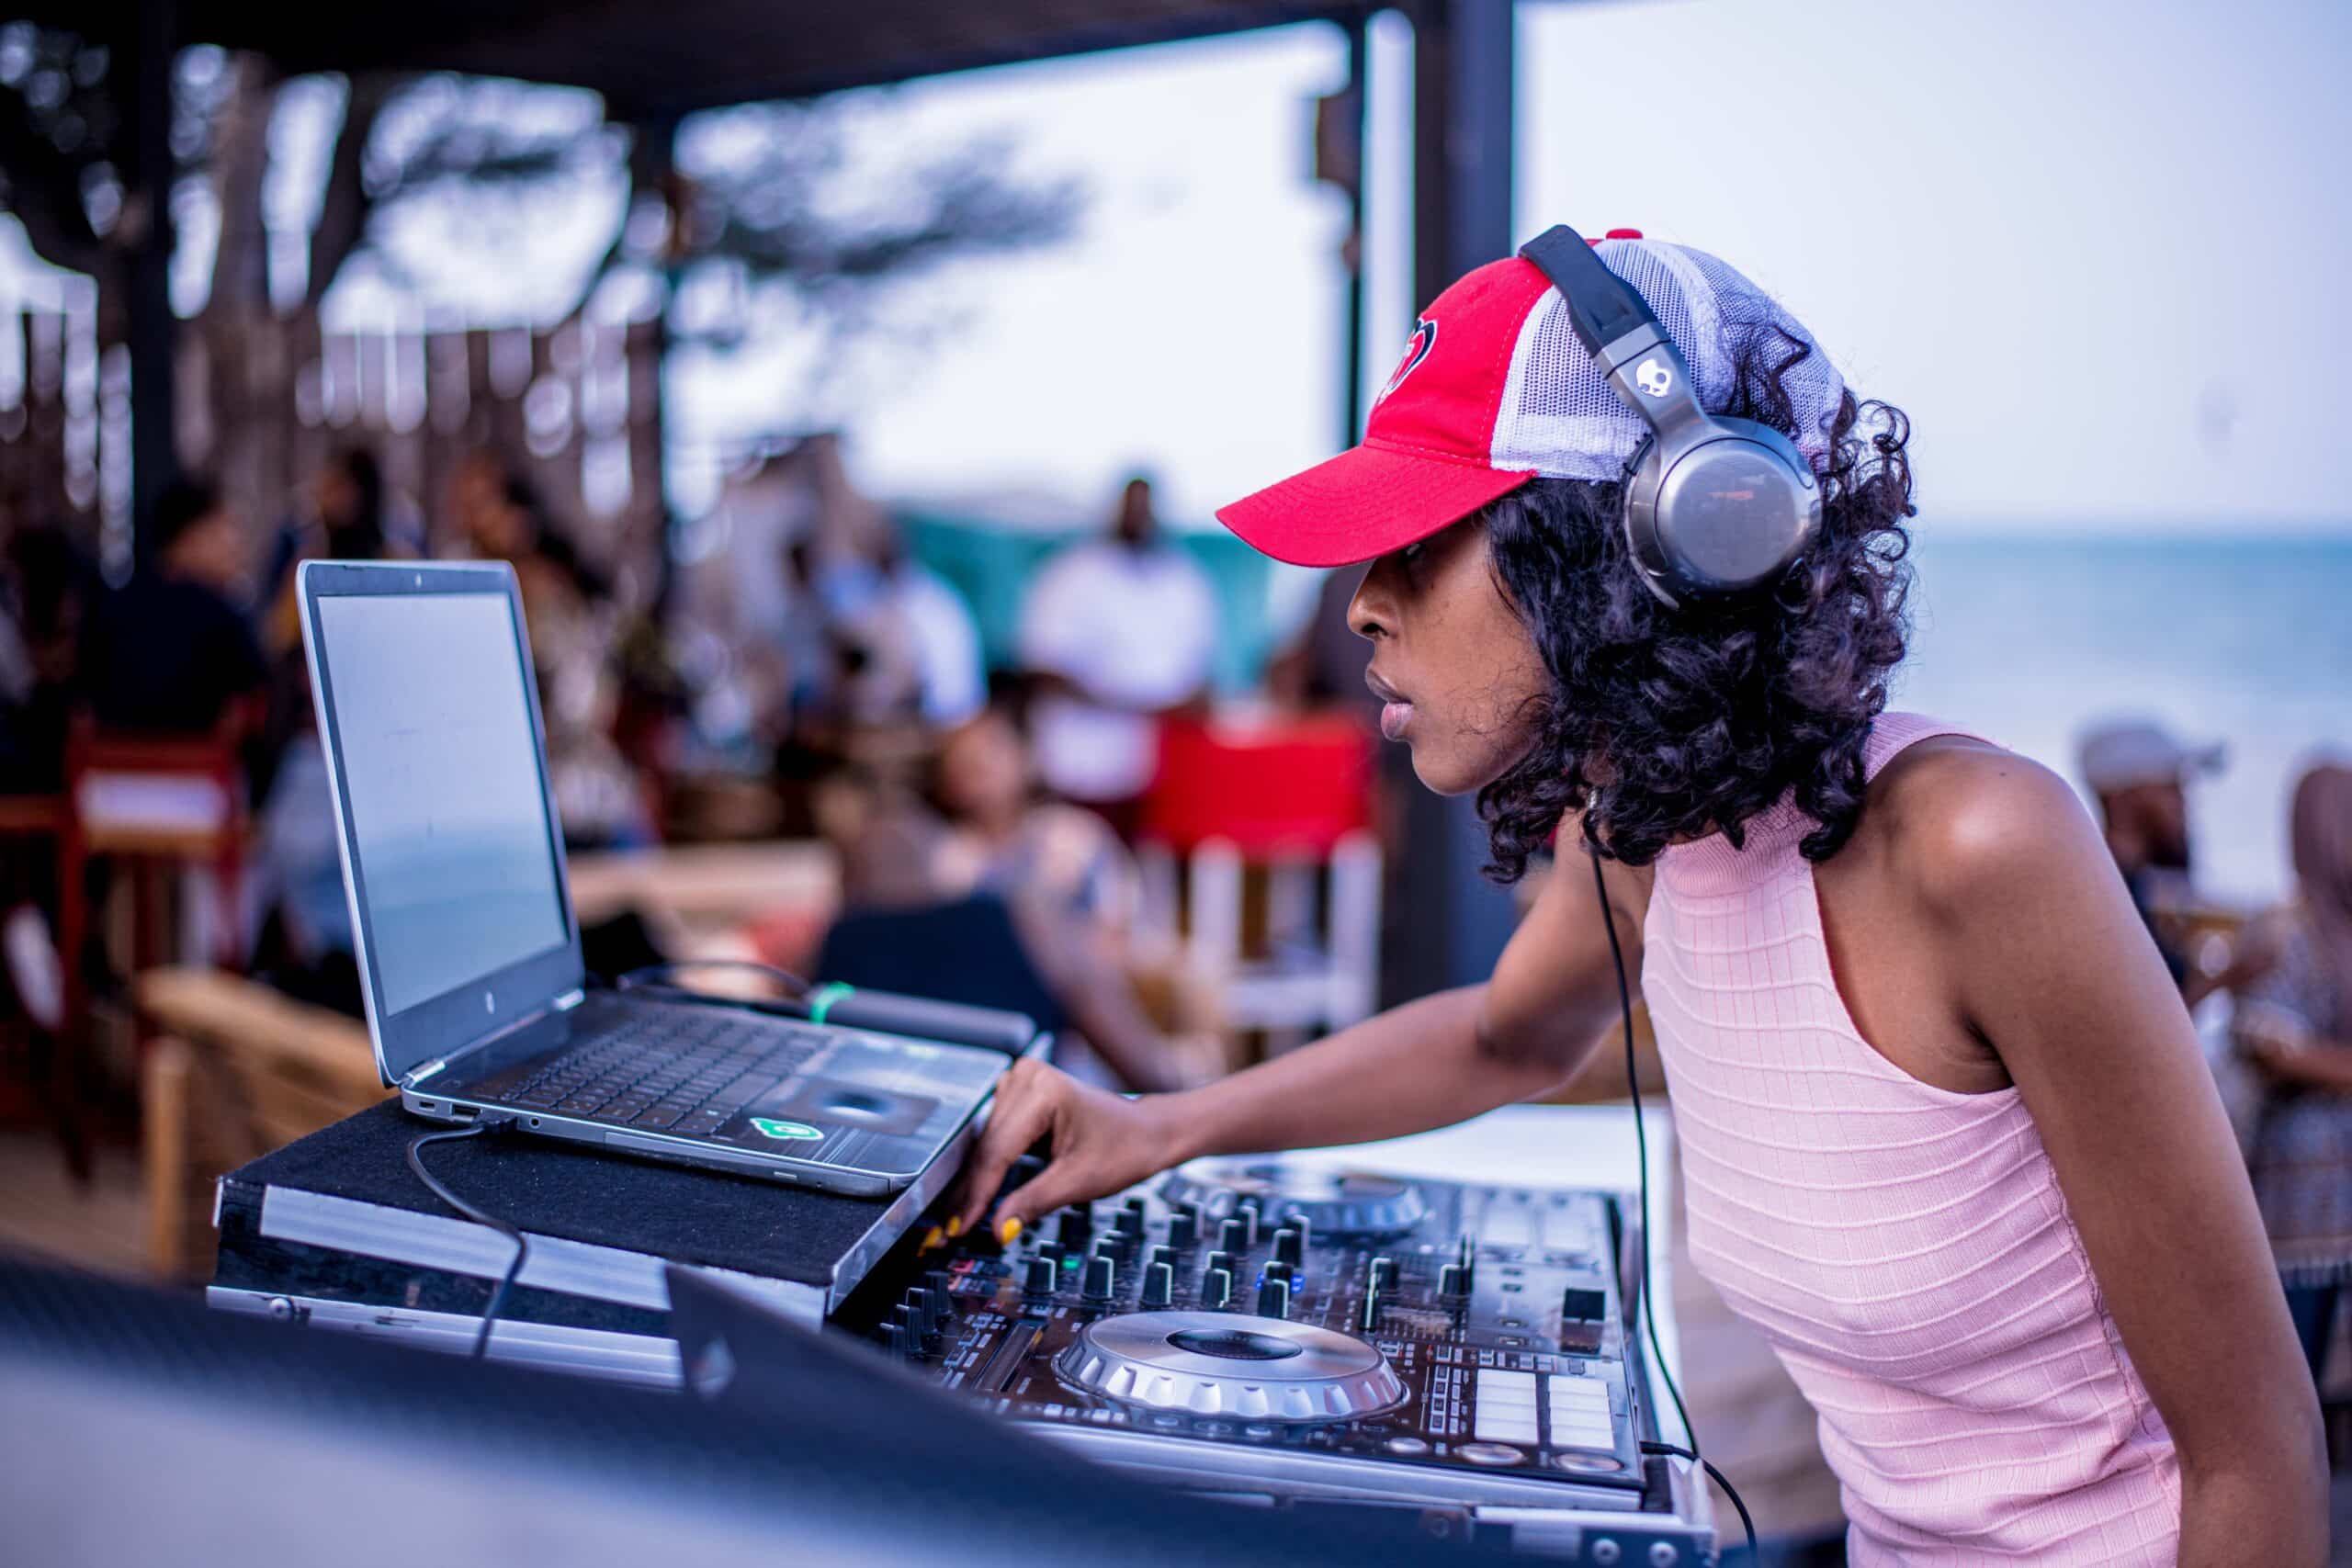 Event DJ Photo by Keegan Checks: https://www.pexels.com/photo/woman-playing-dj-turntable-2880793/